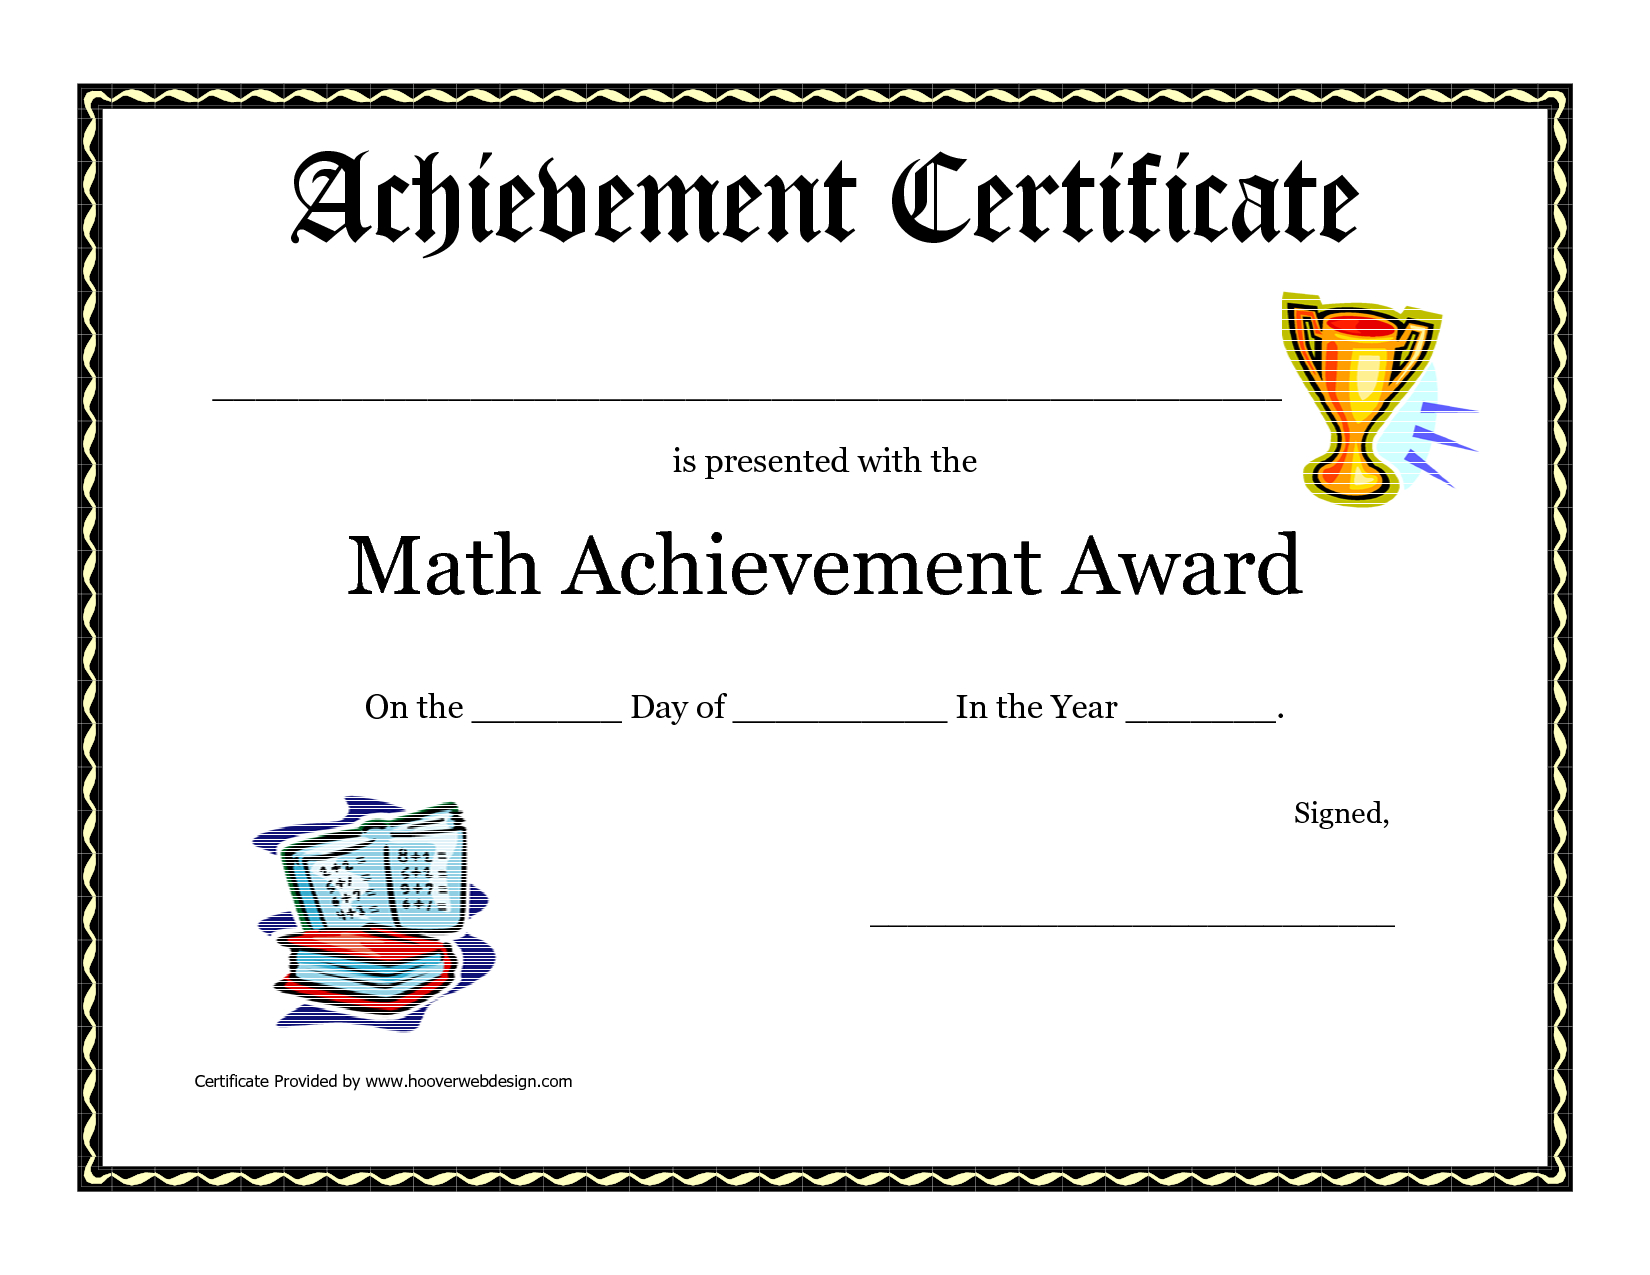 Math Achievement Award Printable Certificate Pdf | Math Activites - Free Printable Swimming Certificates For Kids